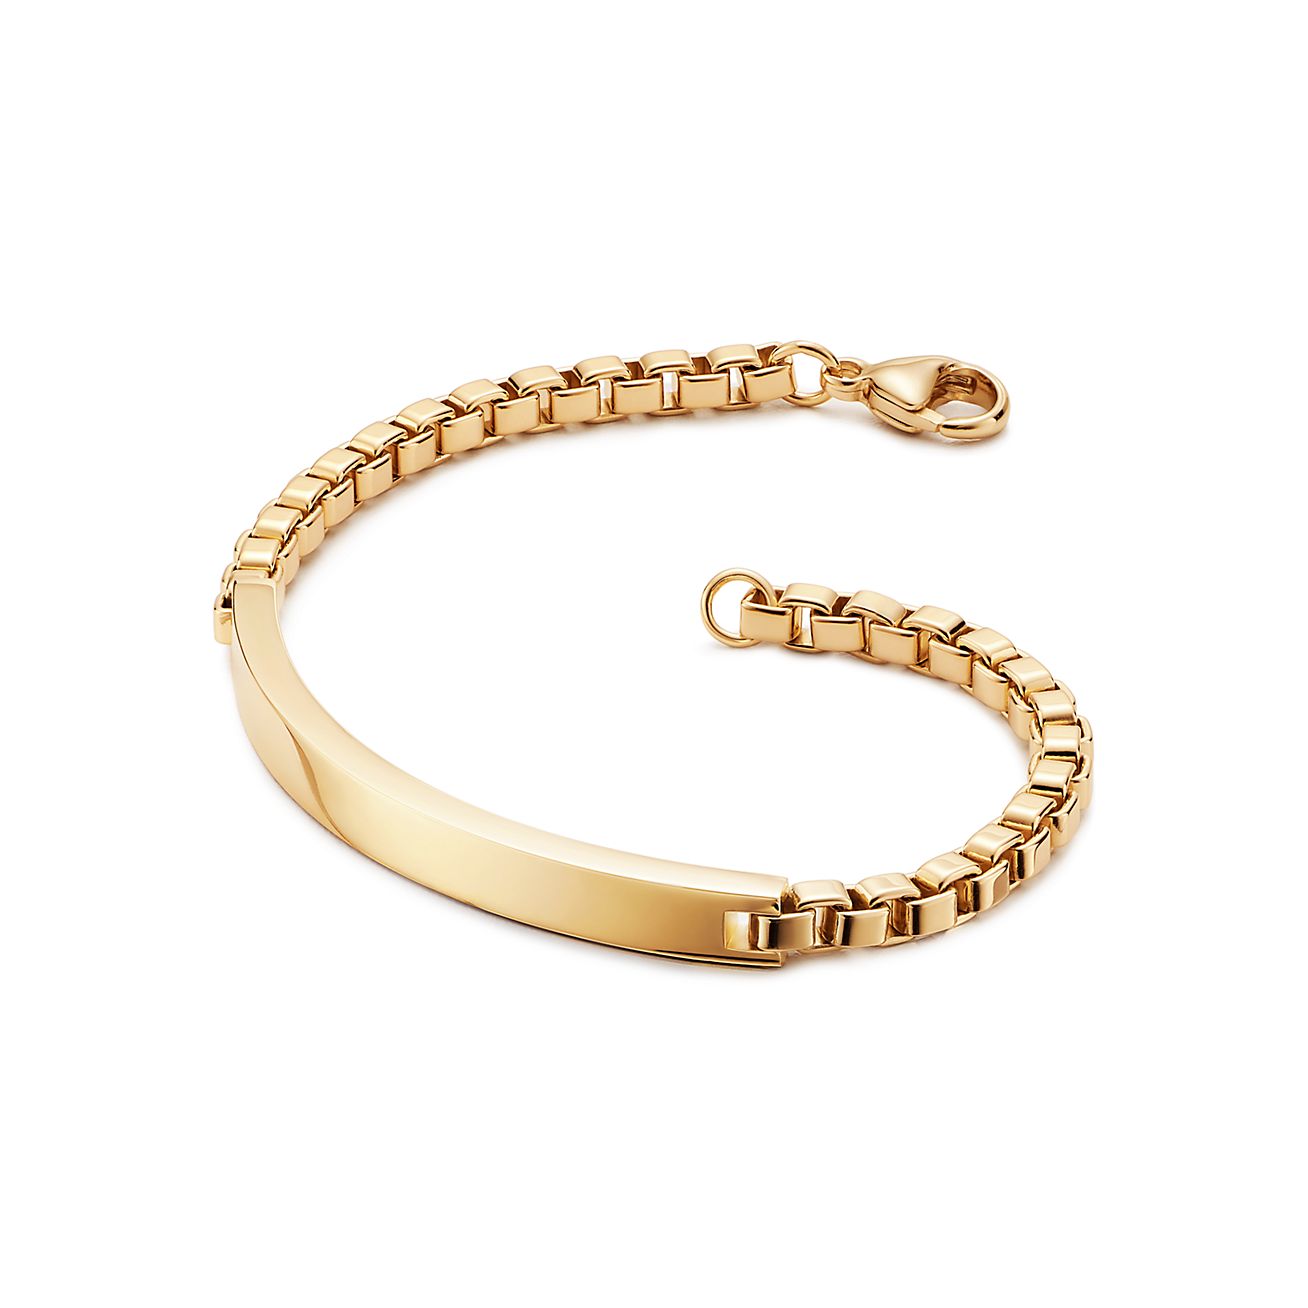 Venetian Link I.D. Bracelet in 18k Gold